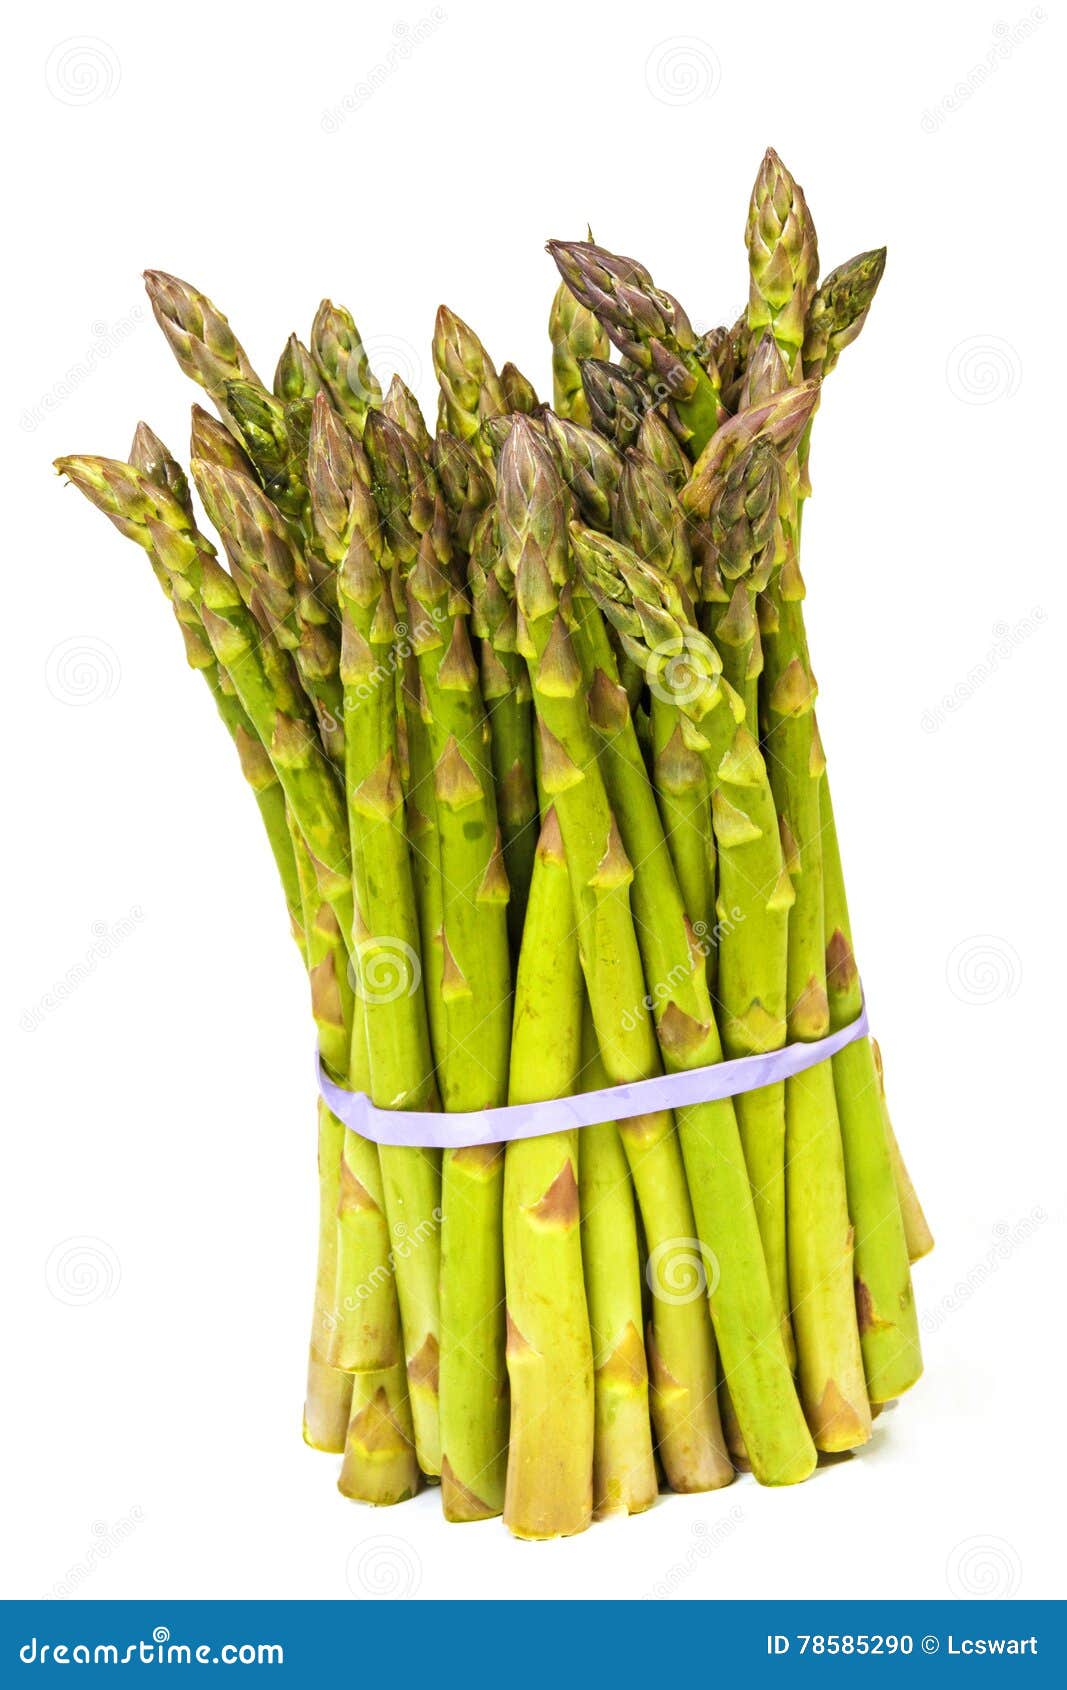 elastic-band-securing-bunch-fresh-asparagus-studio-shot-natural-green-spears-white-background-78585290.jpg